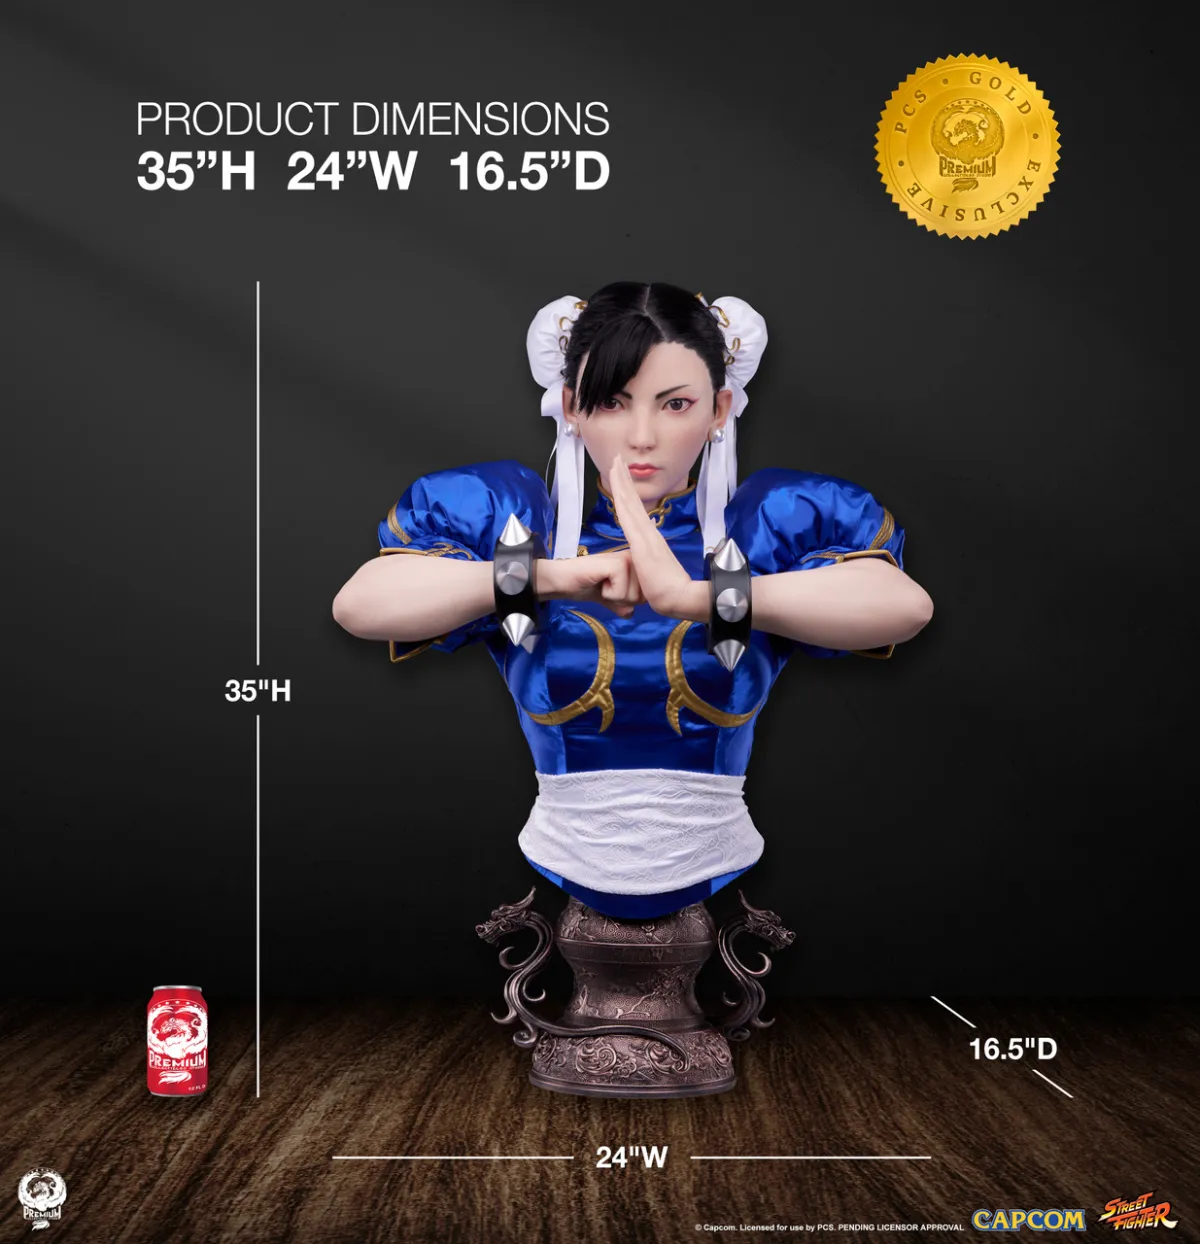 Street Fighter Chun-Li Bust Is a $4,000 Statue 3